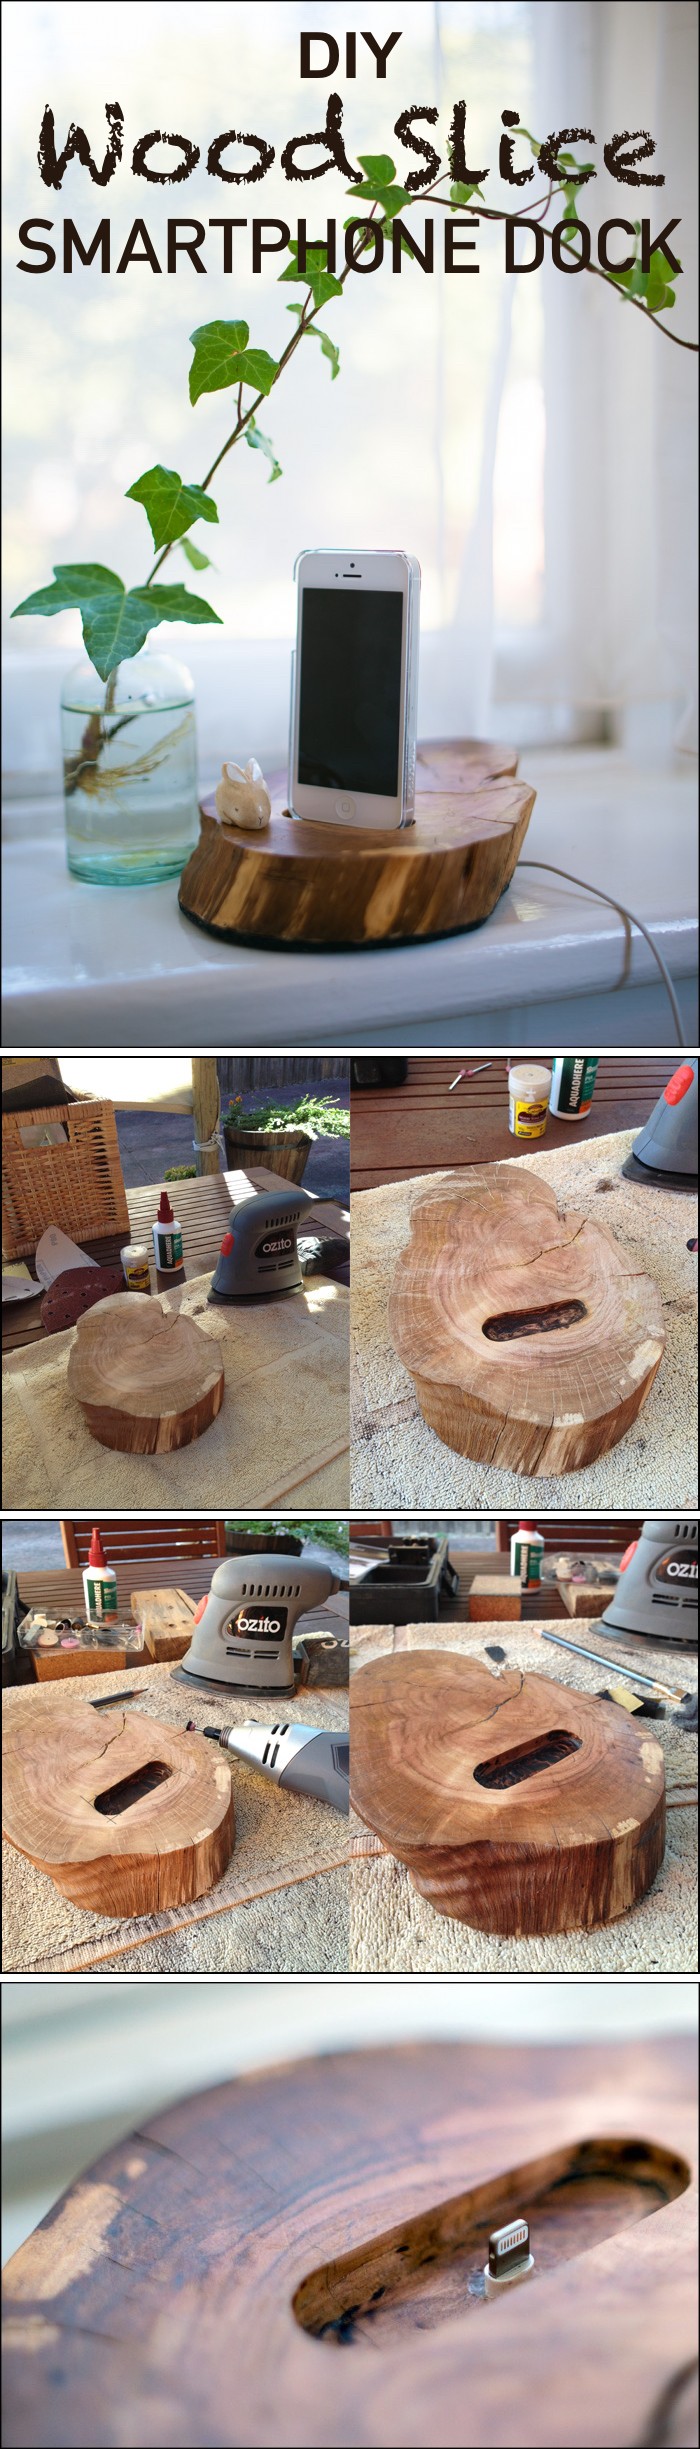 DIY Wood Slice Smartphone Dock